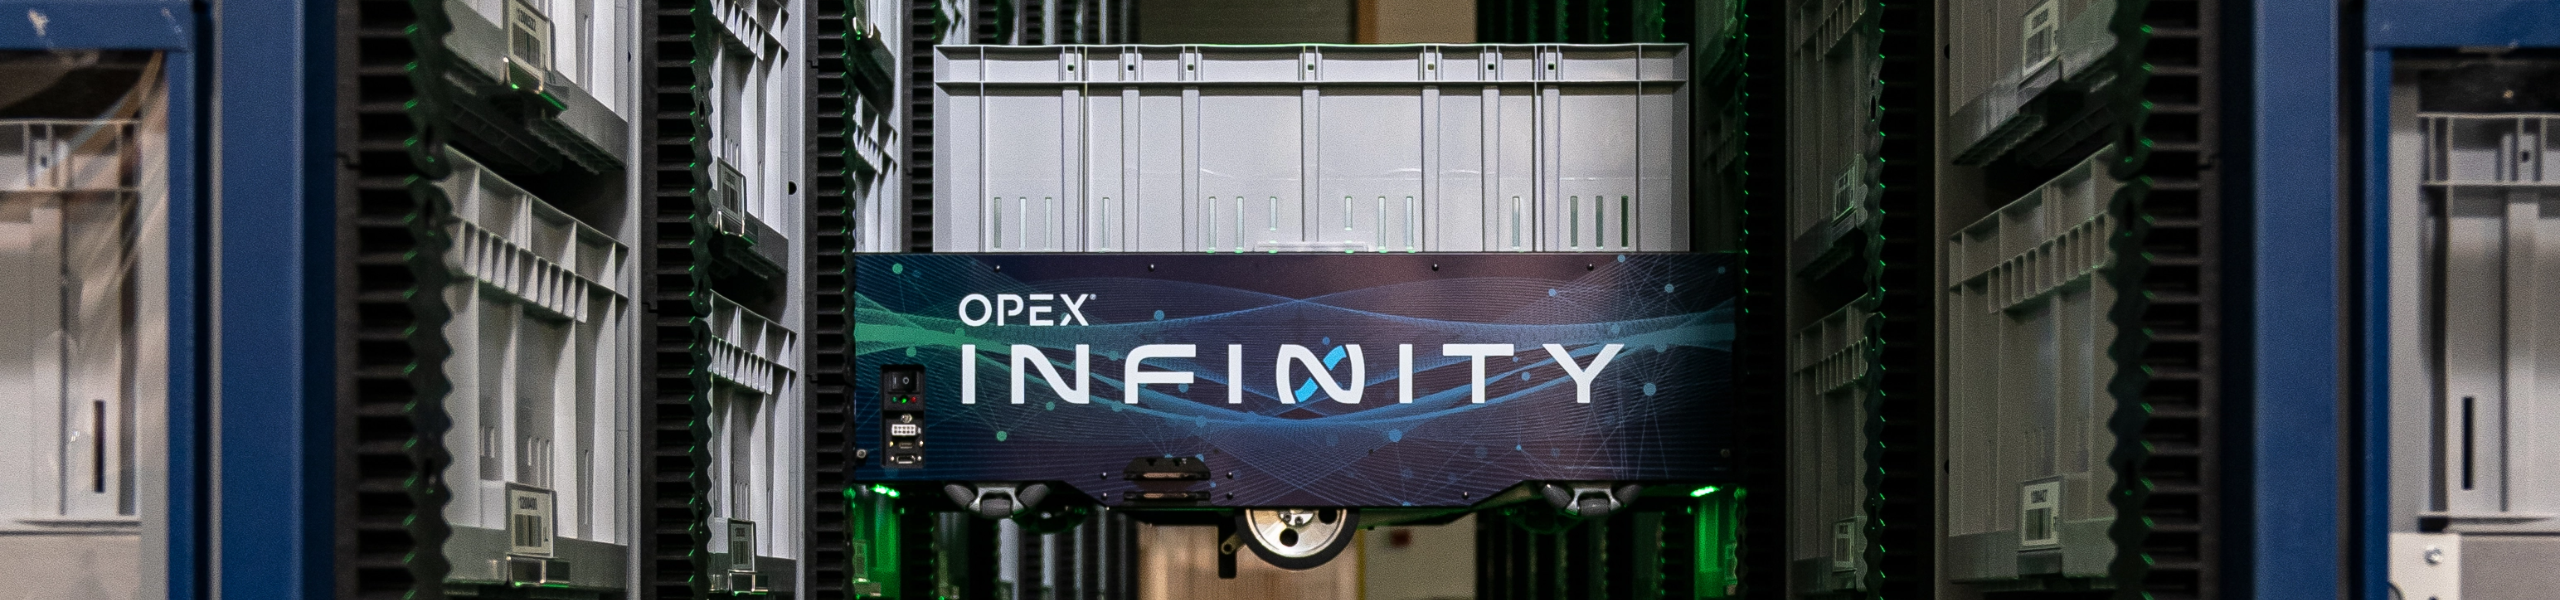 OPEX Infinity Ibot